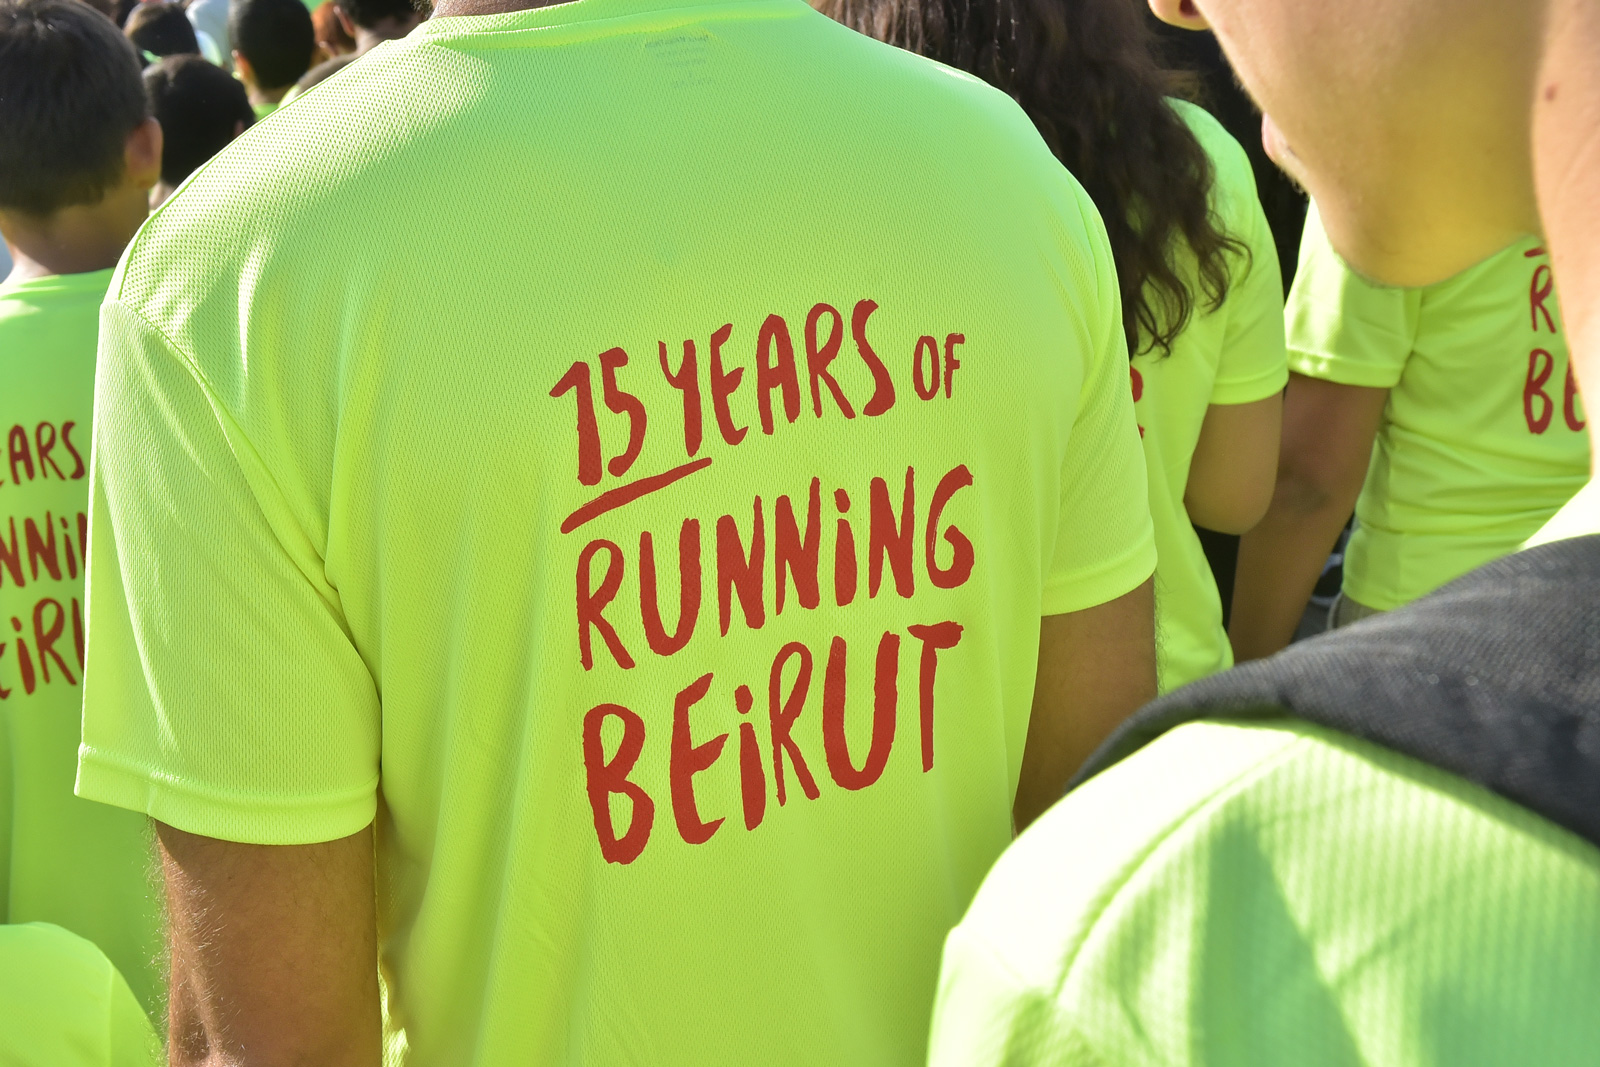 Blom Bank Beirut Marathon 2017